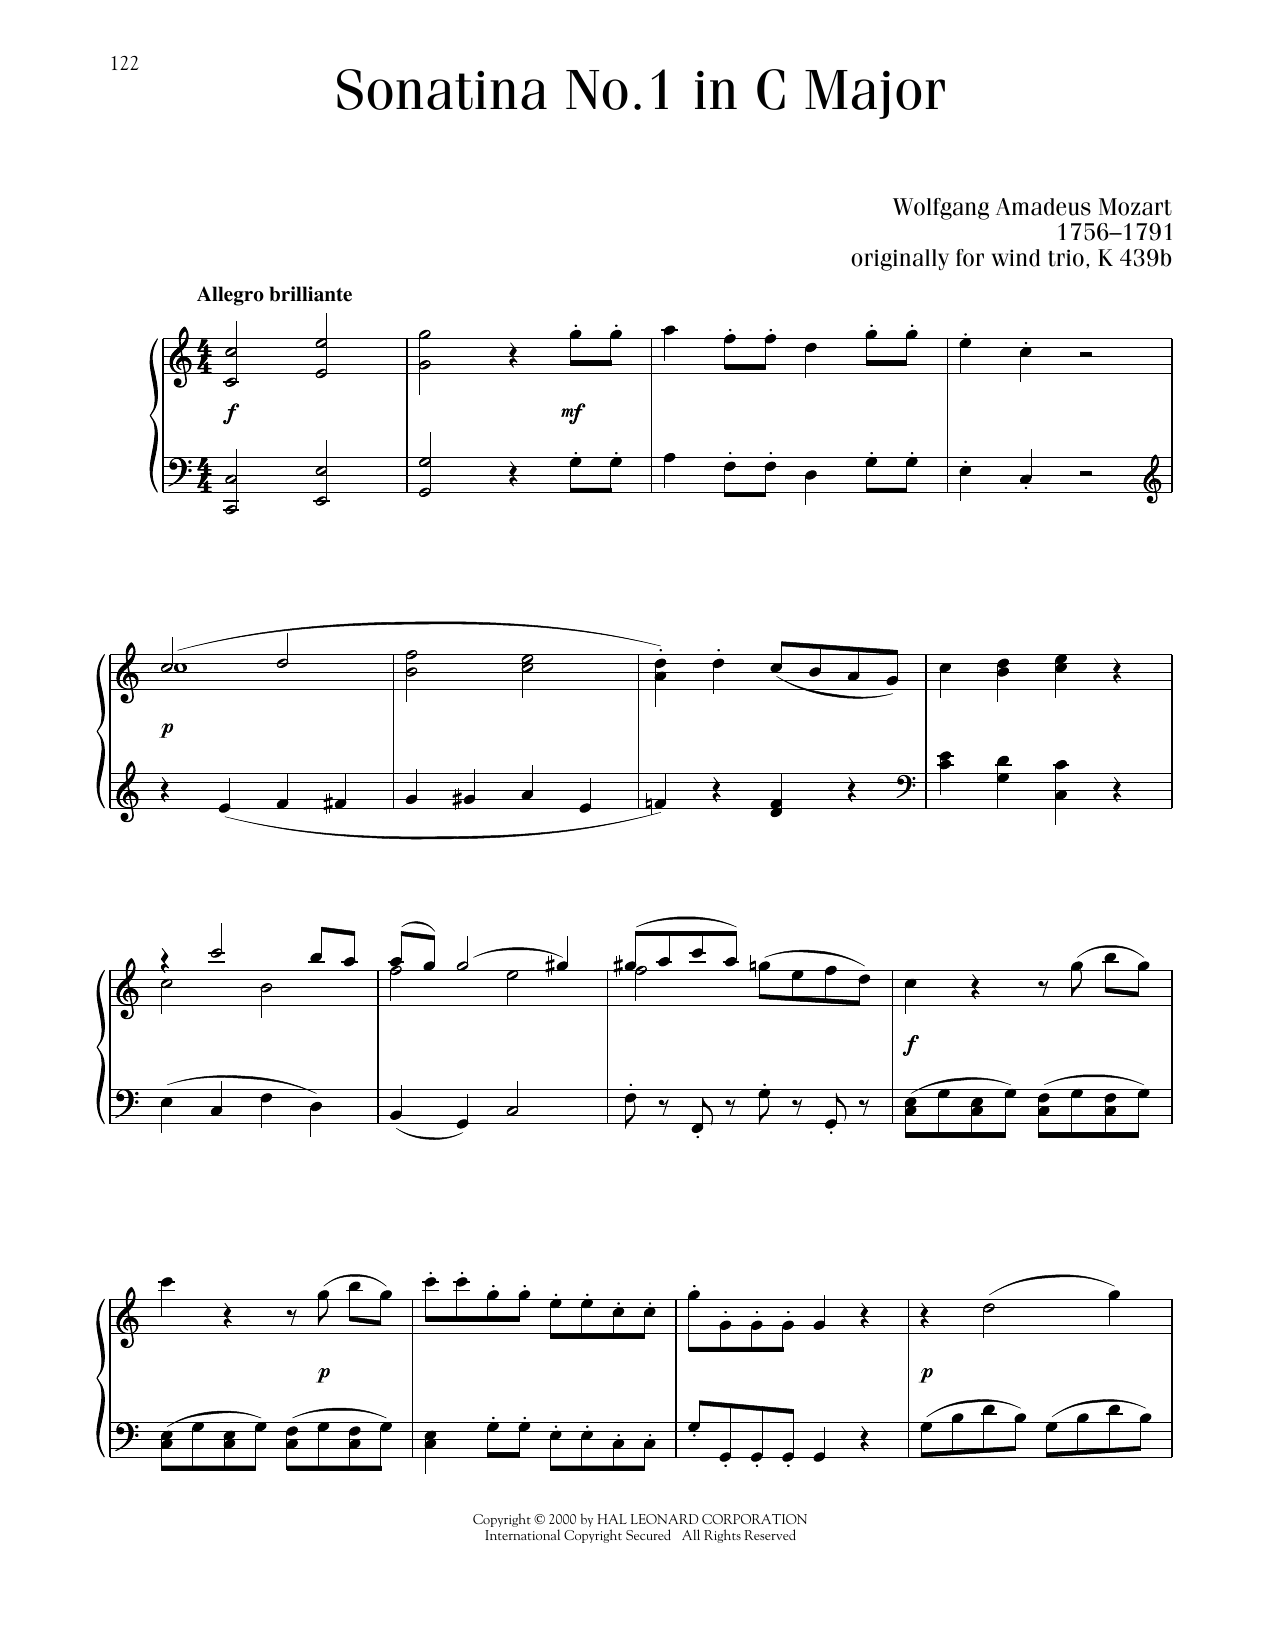 Wolfgang Amadeus Mozart Sonatina No. 1 In C Major sheet music notes printable PDF score